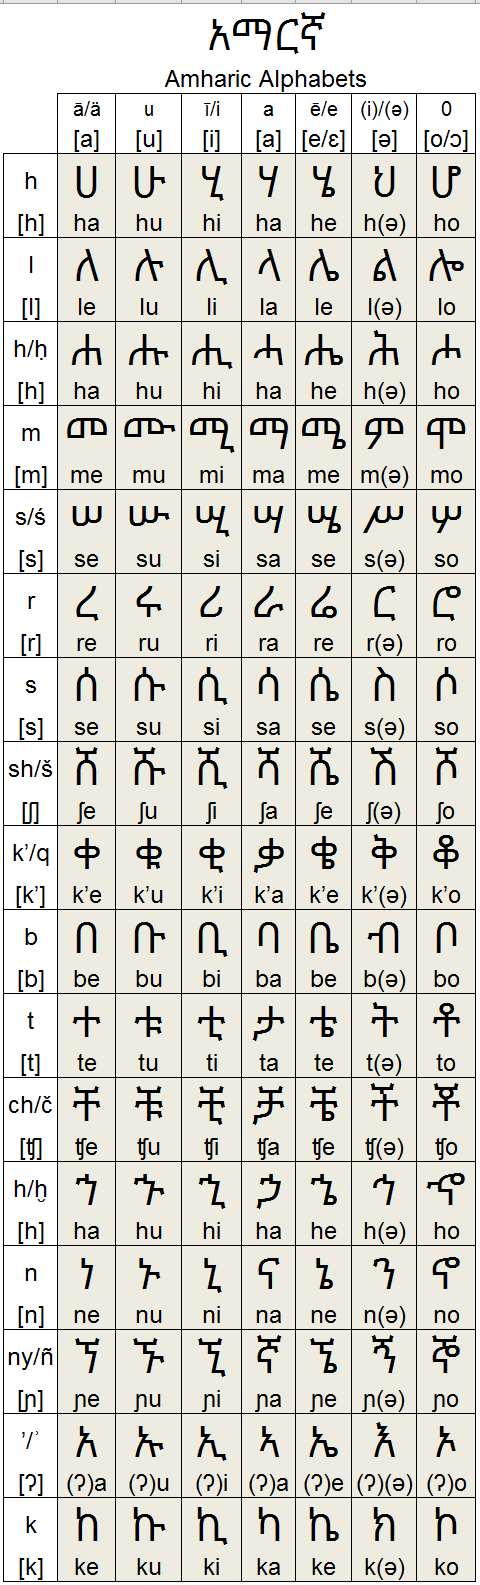 Amharic_Alphabets_part1